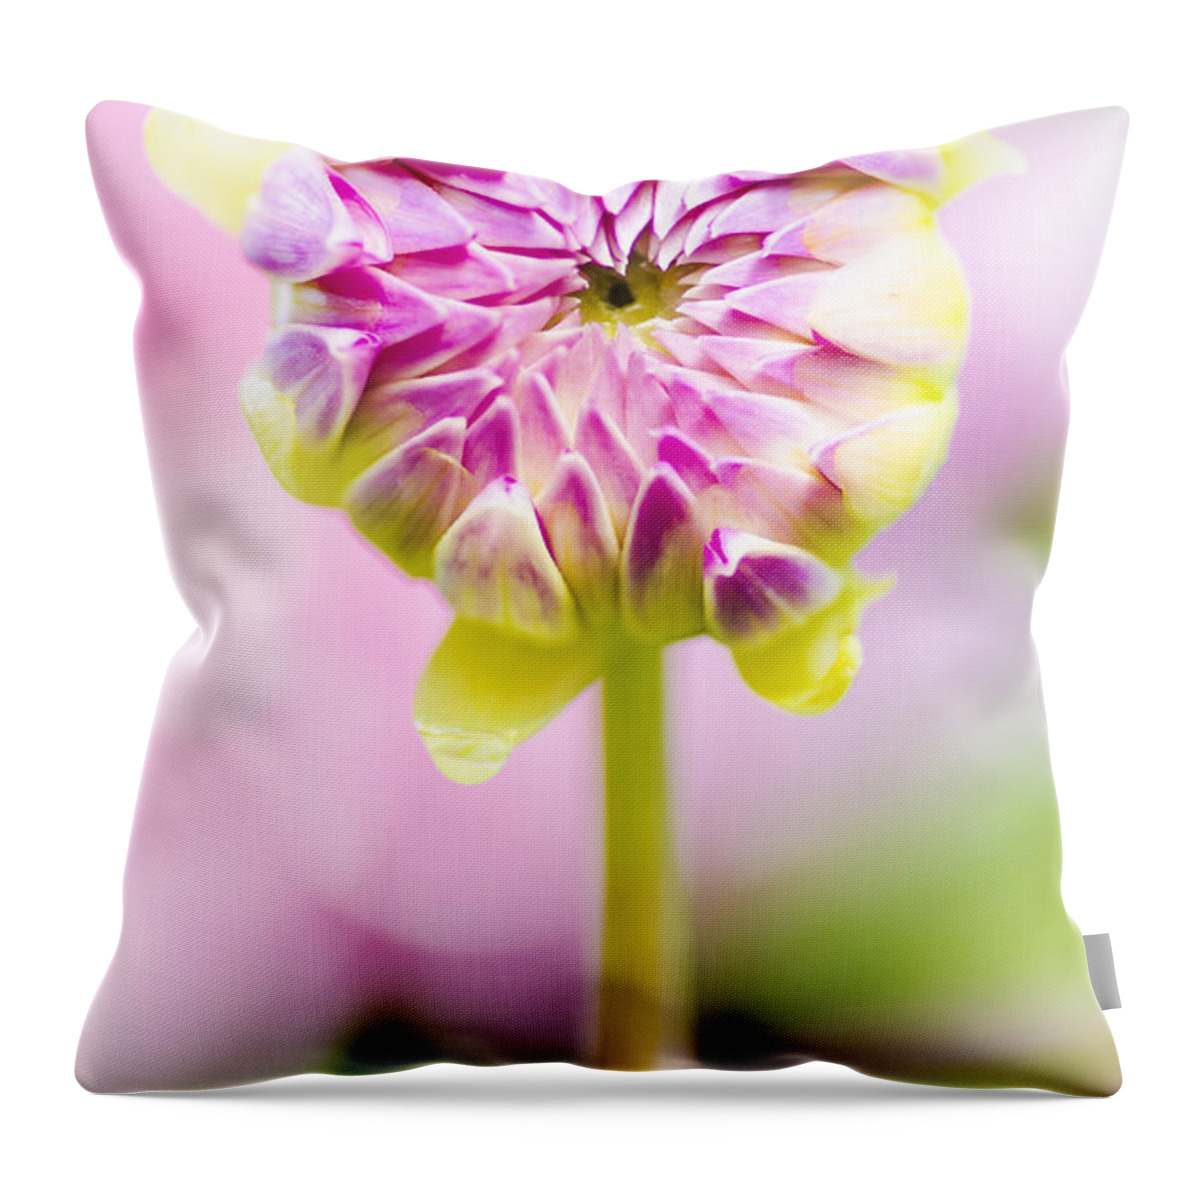 Dahlia Throw Pillow featuring the photograph Closed pink baby dahlia flower. Spring Blossom #1 by Jorgo Photography